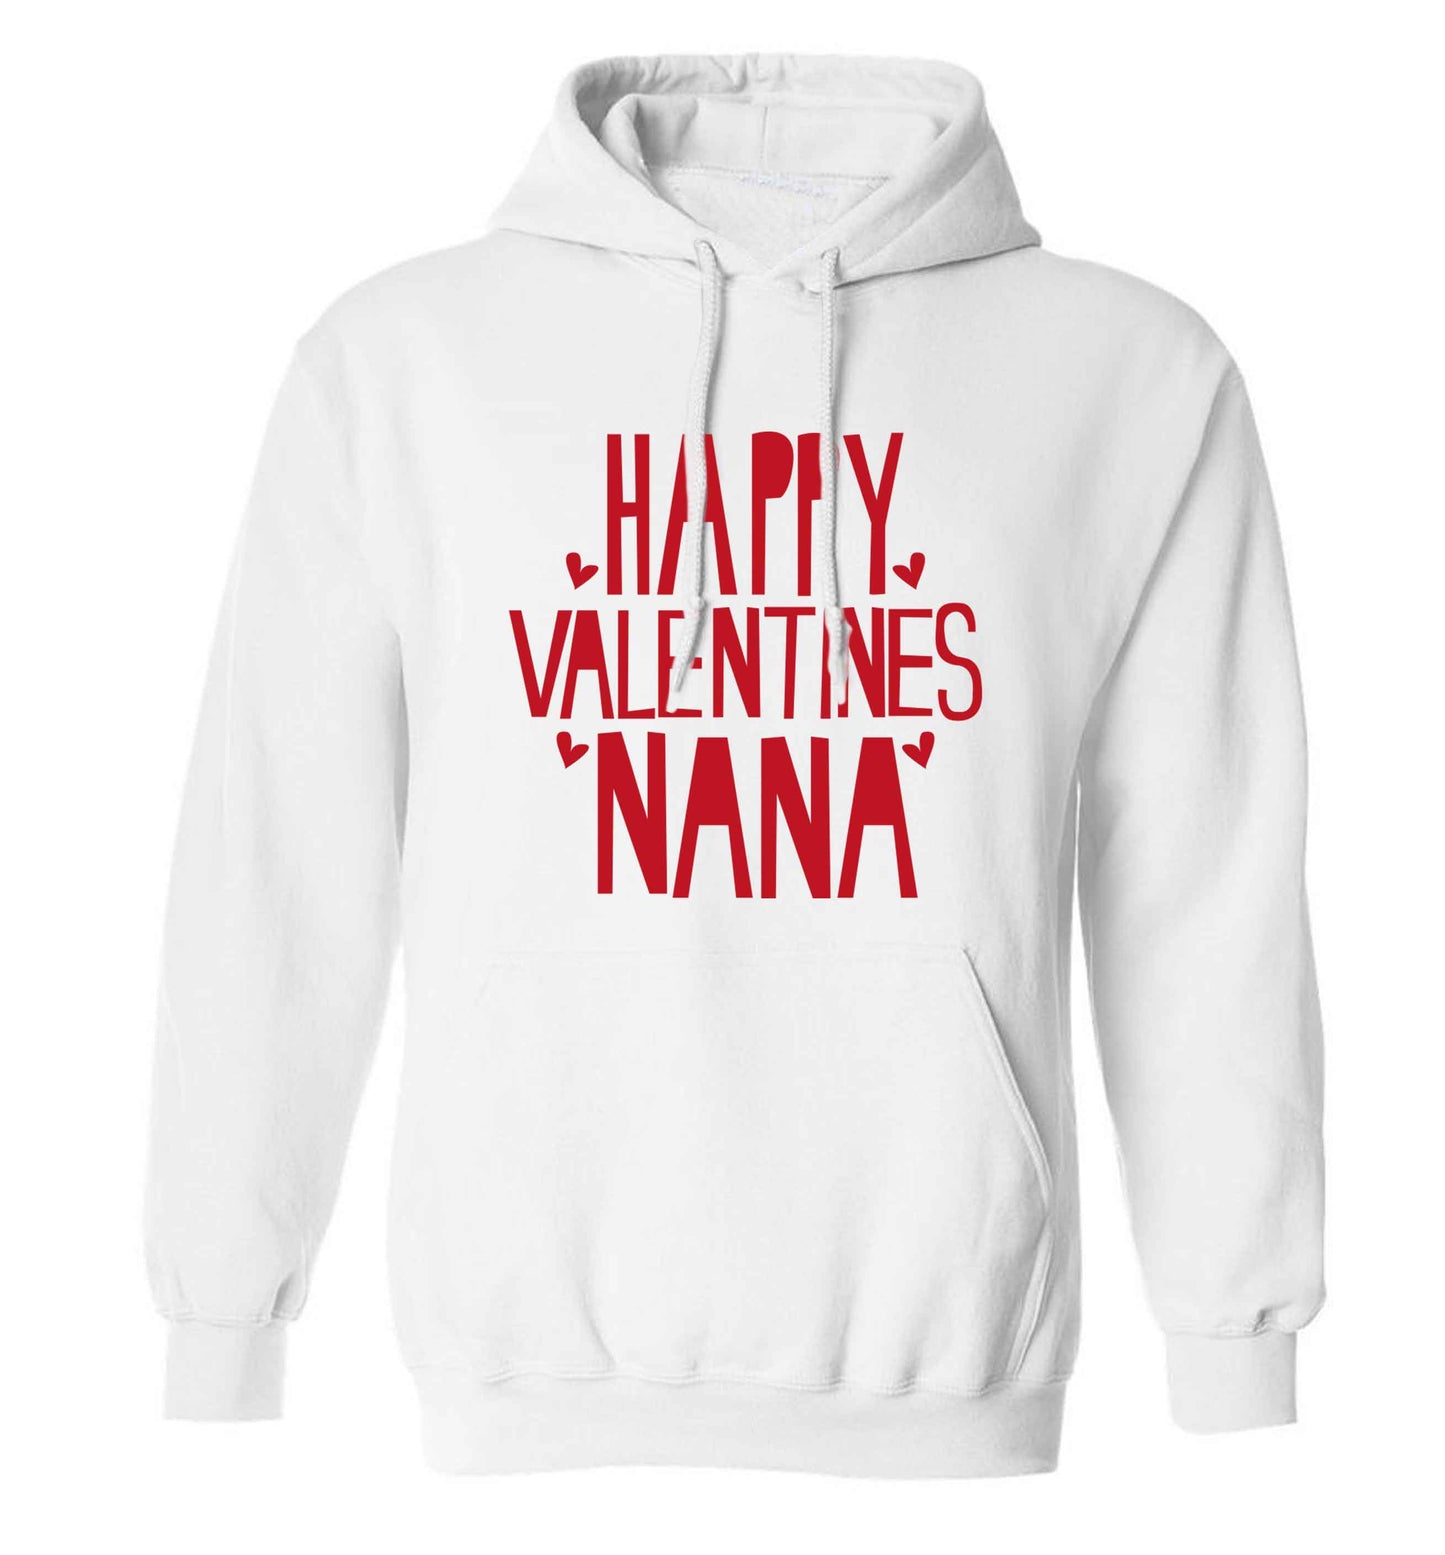 Happy valentines nana adults unisex white hoodie 2XL